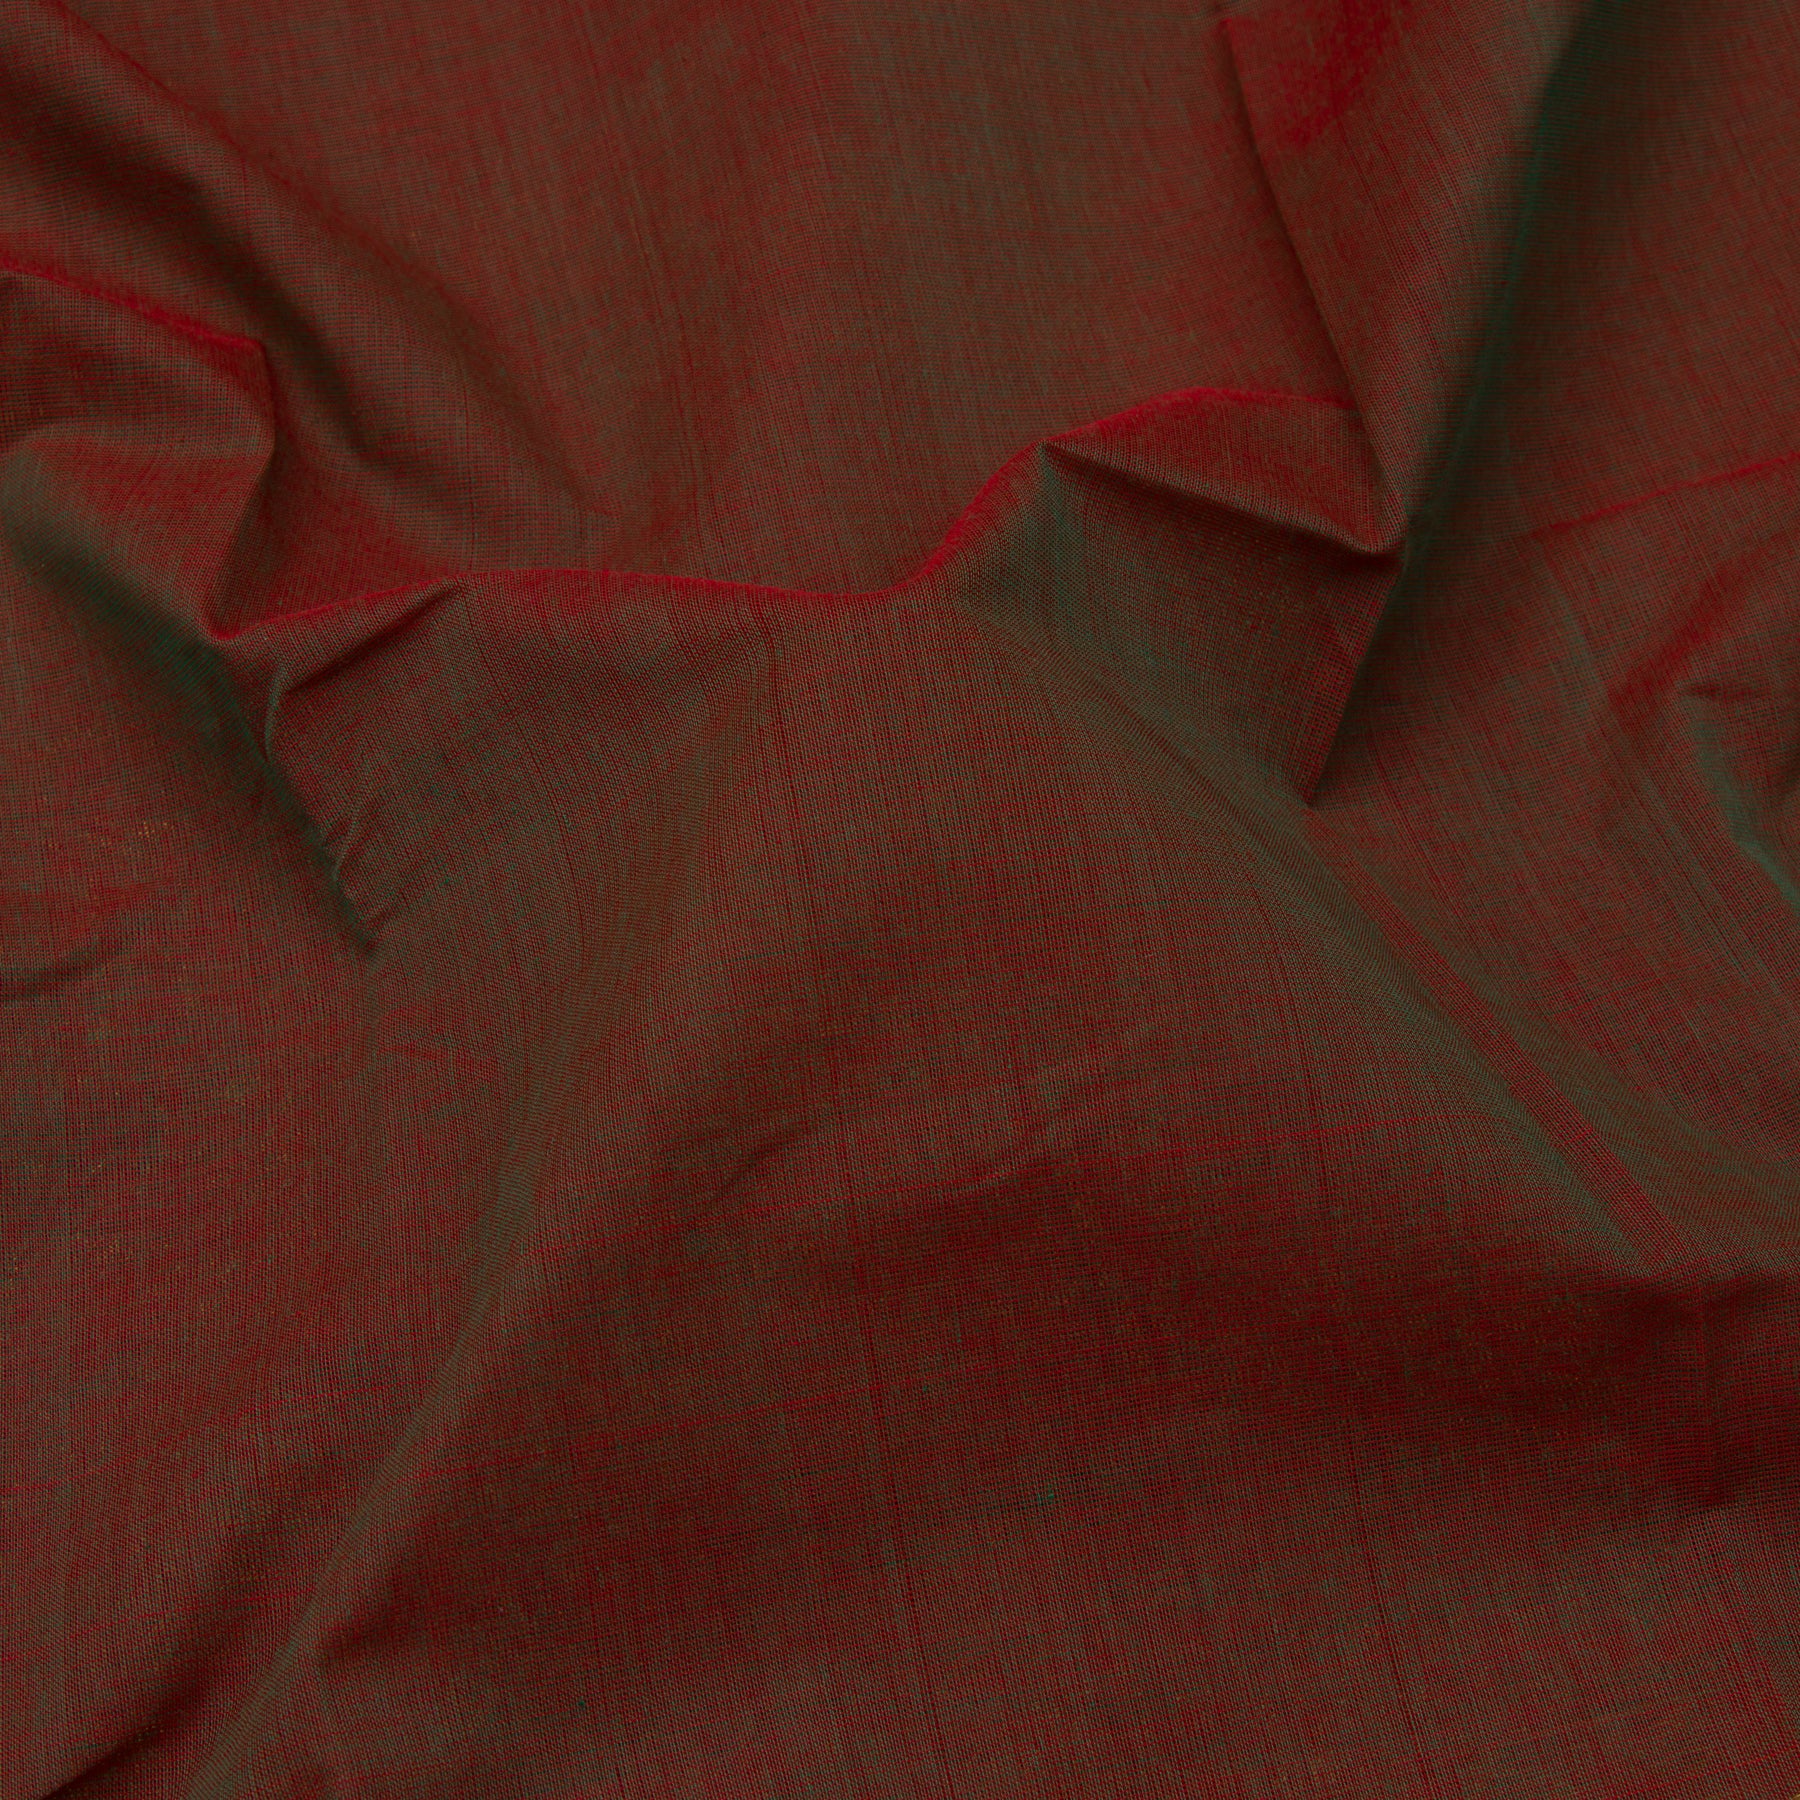 Kanakavalli Kanchi Cotton Sari 23-613-HS003-08515 - Fabric View